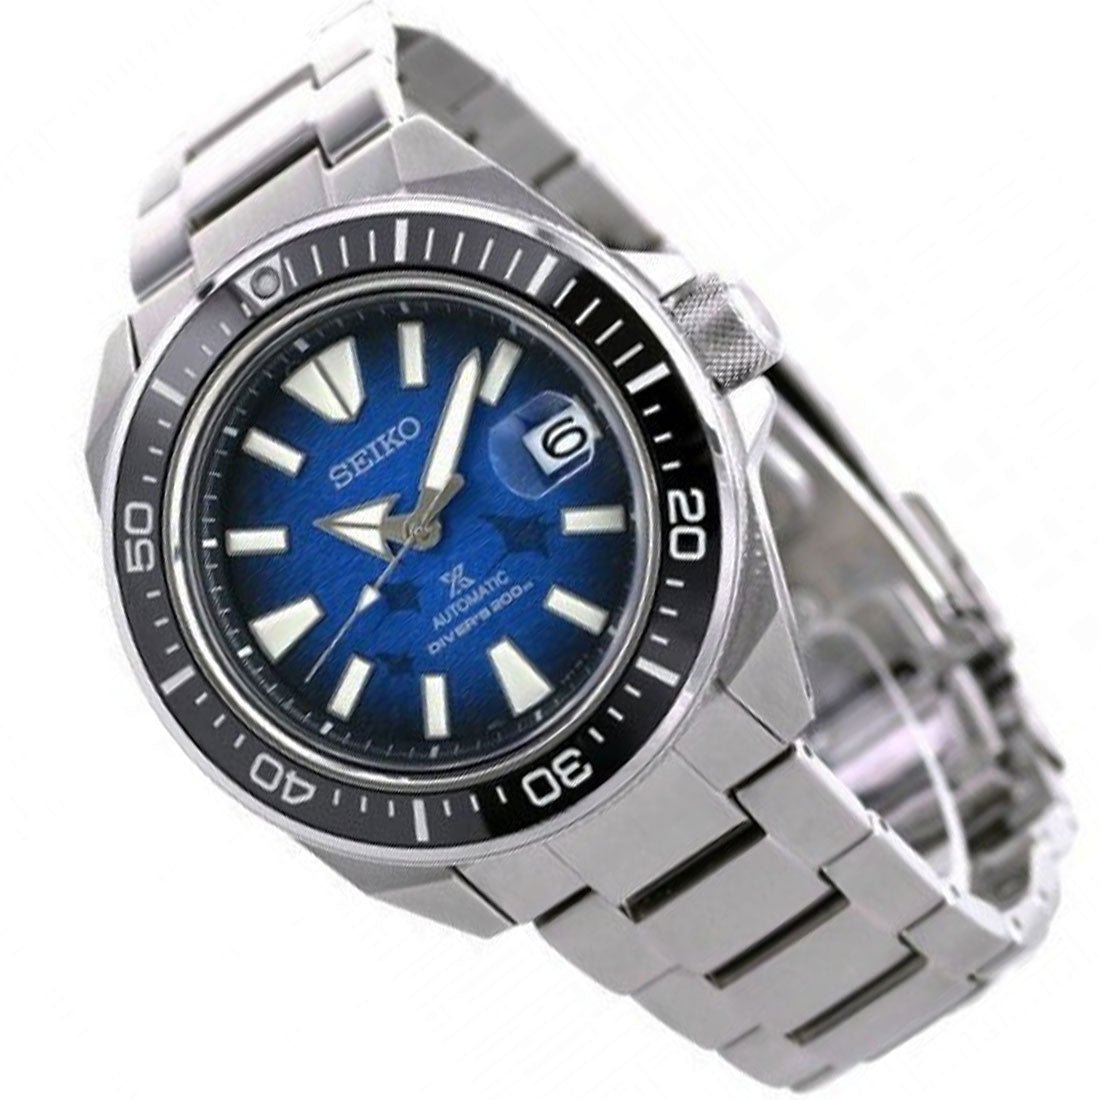 Seiko Prospex Manta Ray Save the Ocean Dive Watch SRPE33 SRPE33K SRPE33K1SBDY065 -Seiko